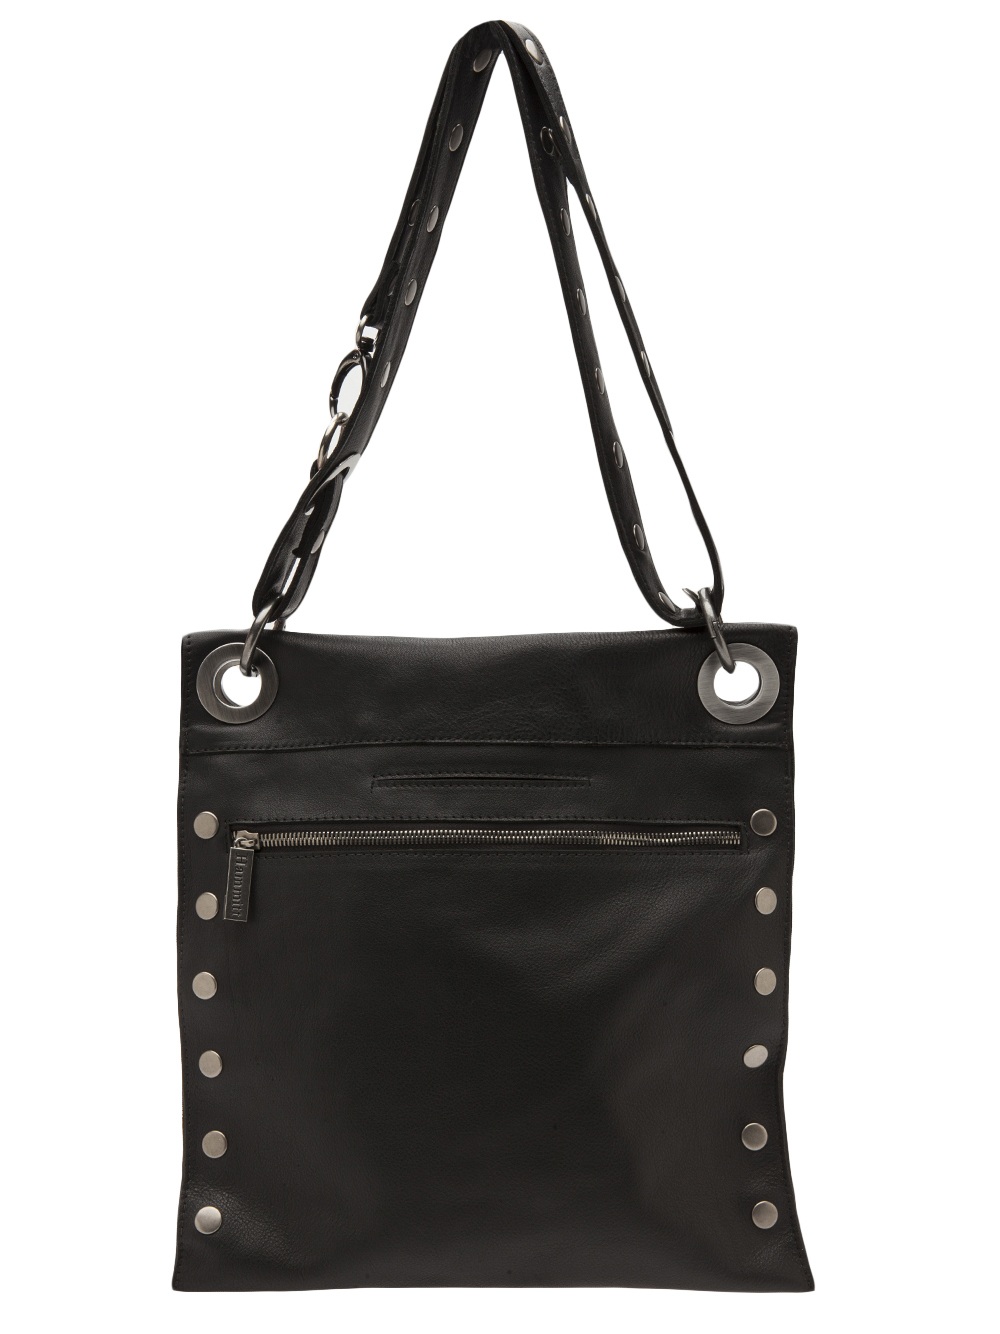 Lyst - Hammitt Fold-Over Leather Cross-Body Bag in Black